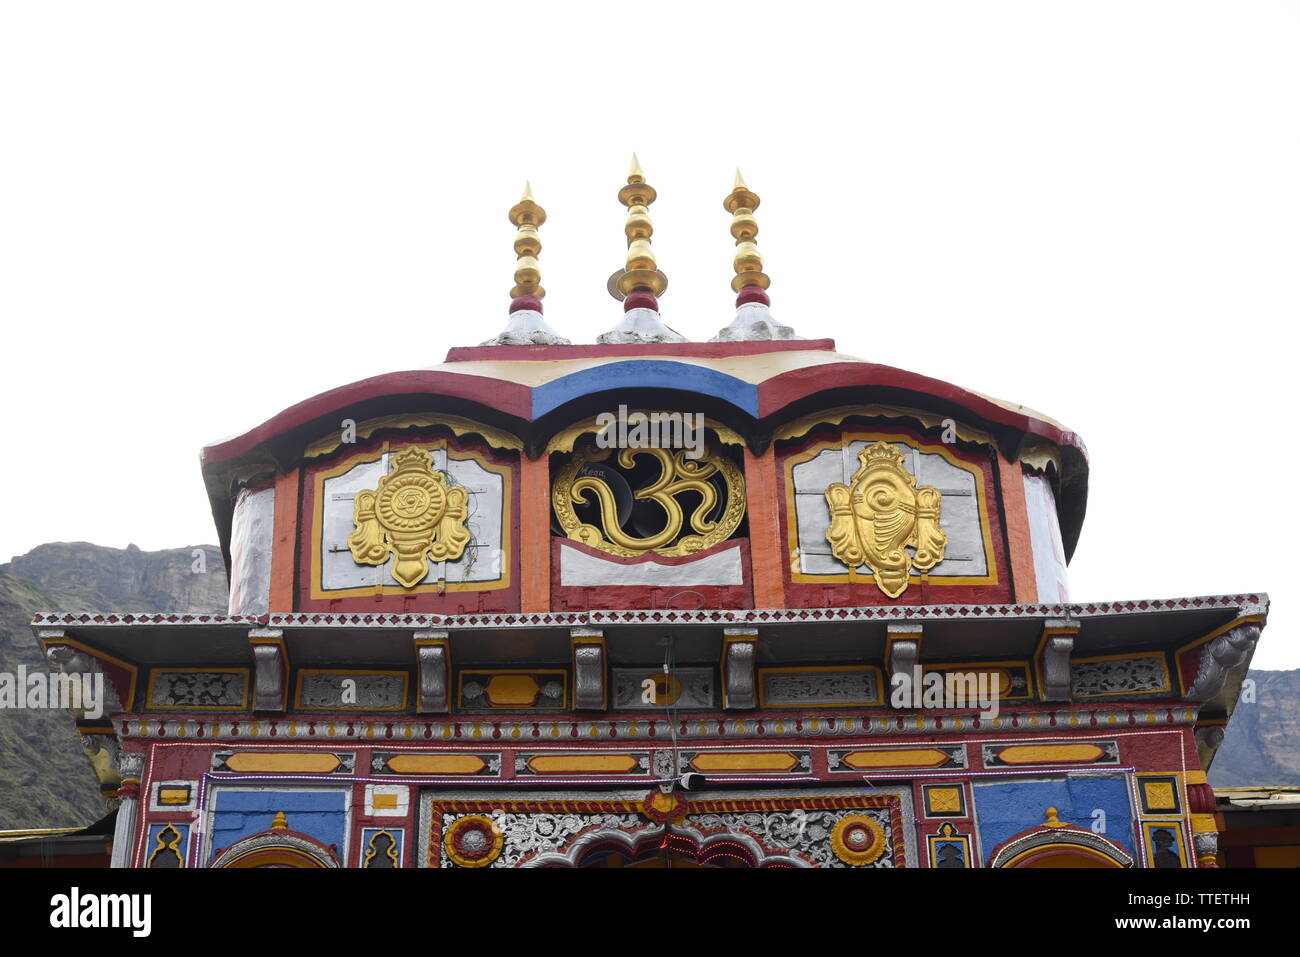 Holy Place Lord Vishnu Badrinath Temple 2019, Badrinath Town, Chamoli District, Uttrakhand, India, Asia Stock Photo